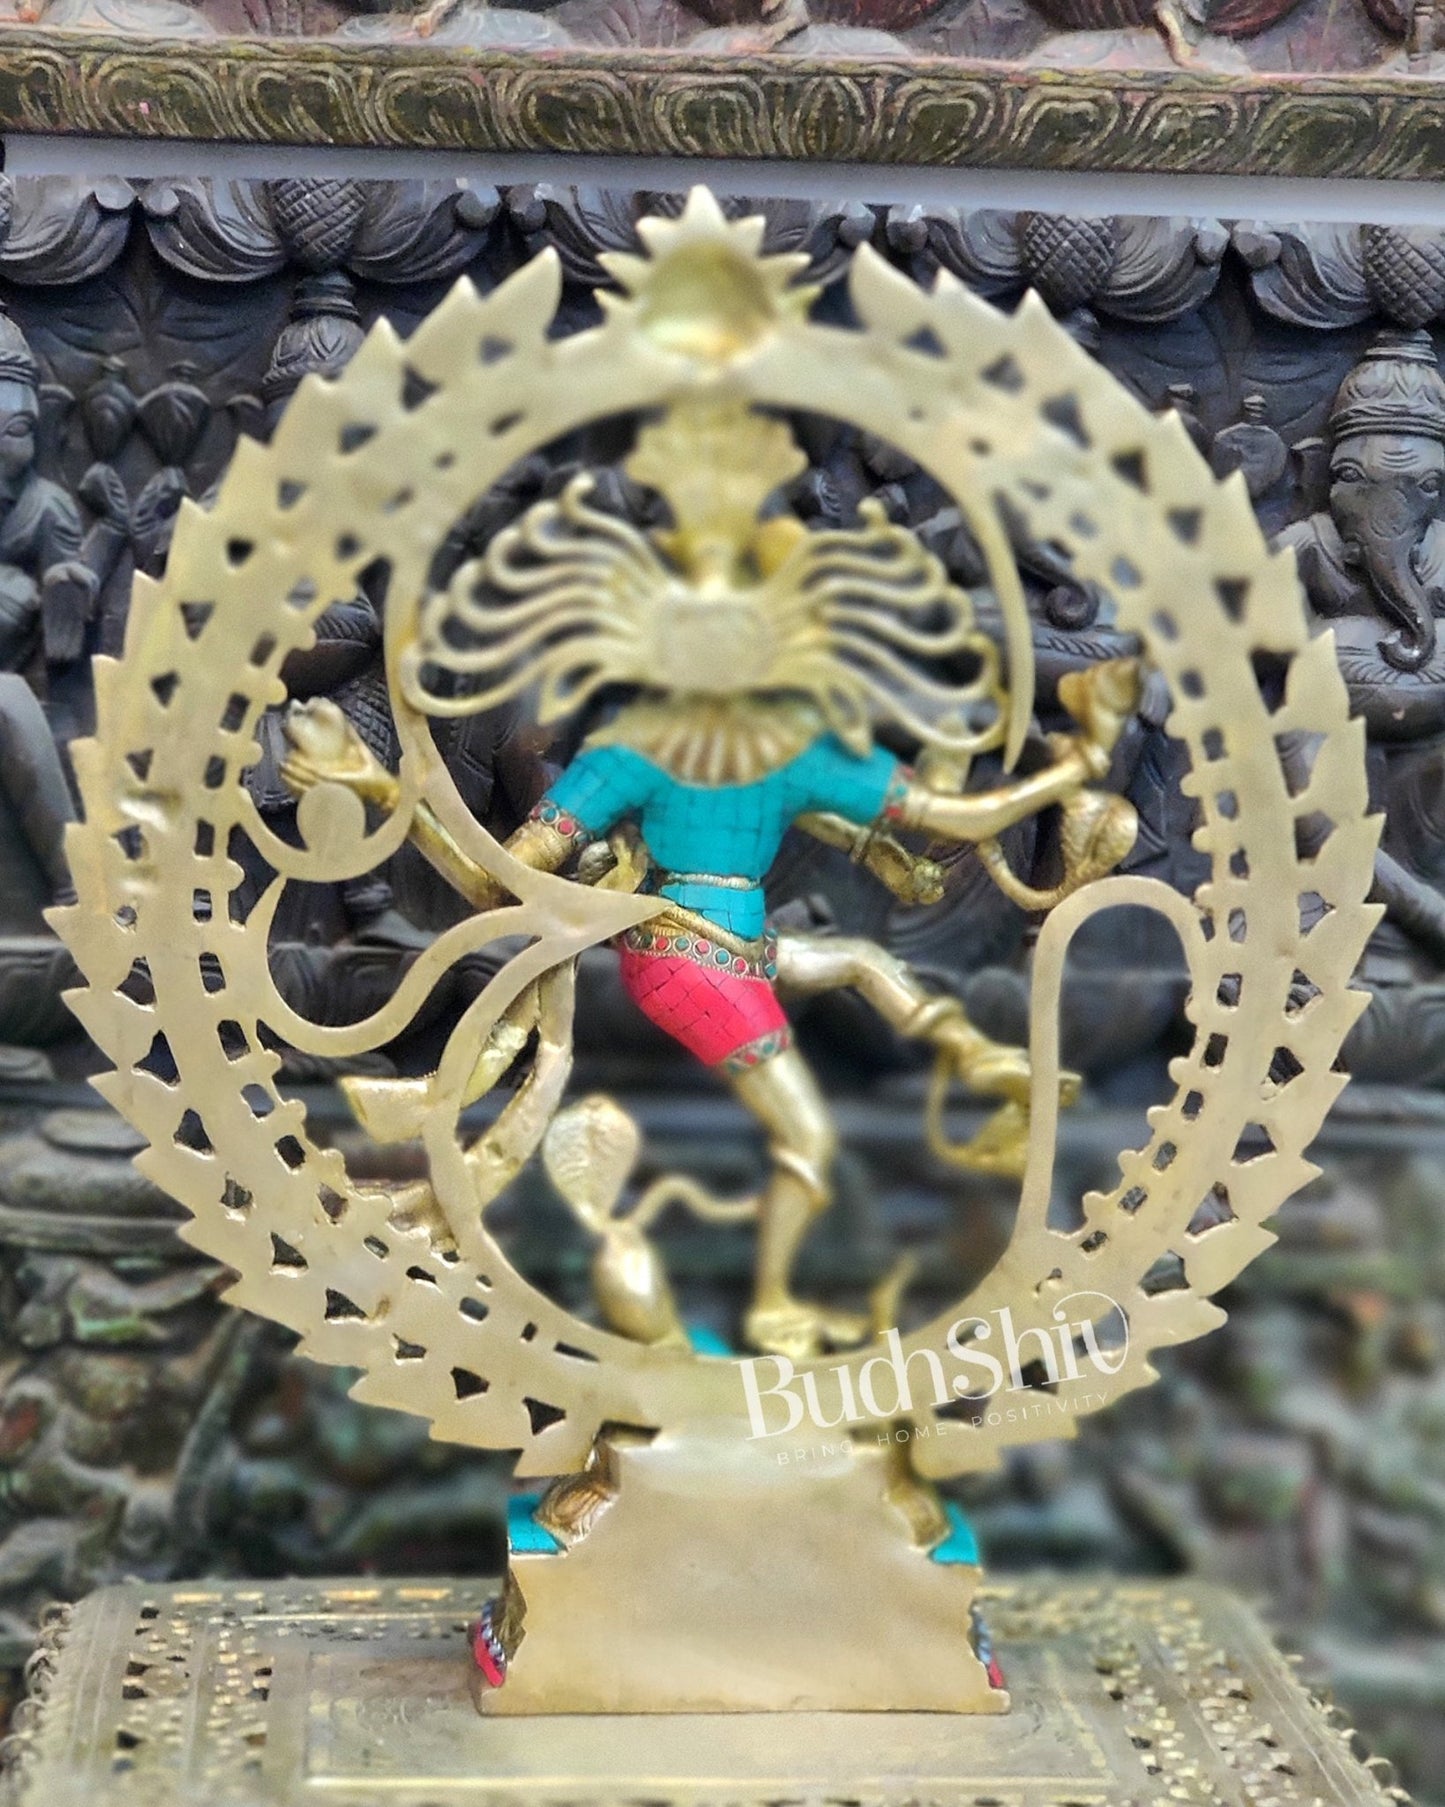 Exquisite Nataraja Brass Statue with OM - 25" Height - Budhshiv.com